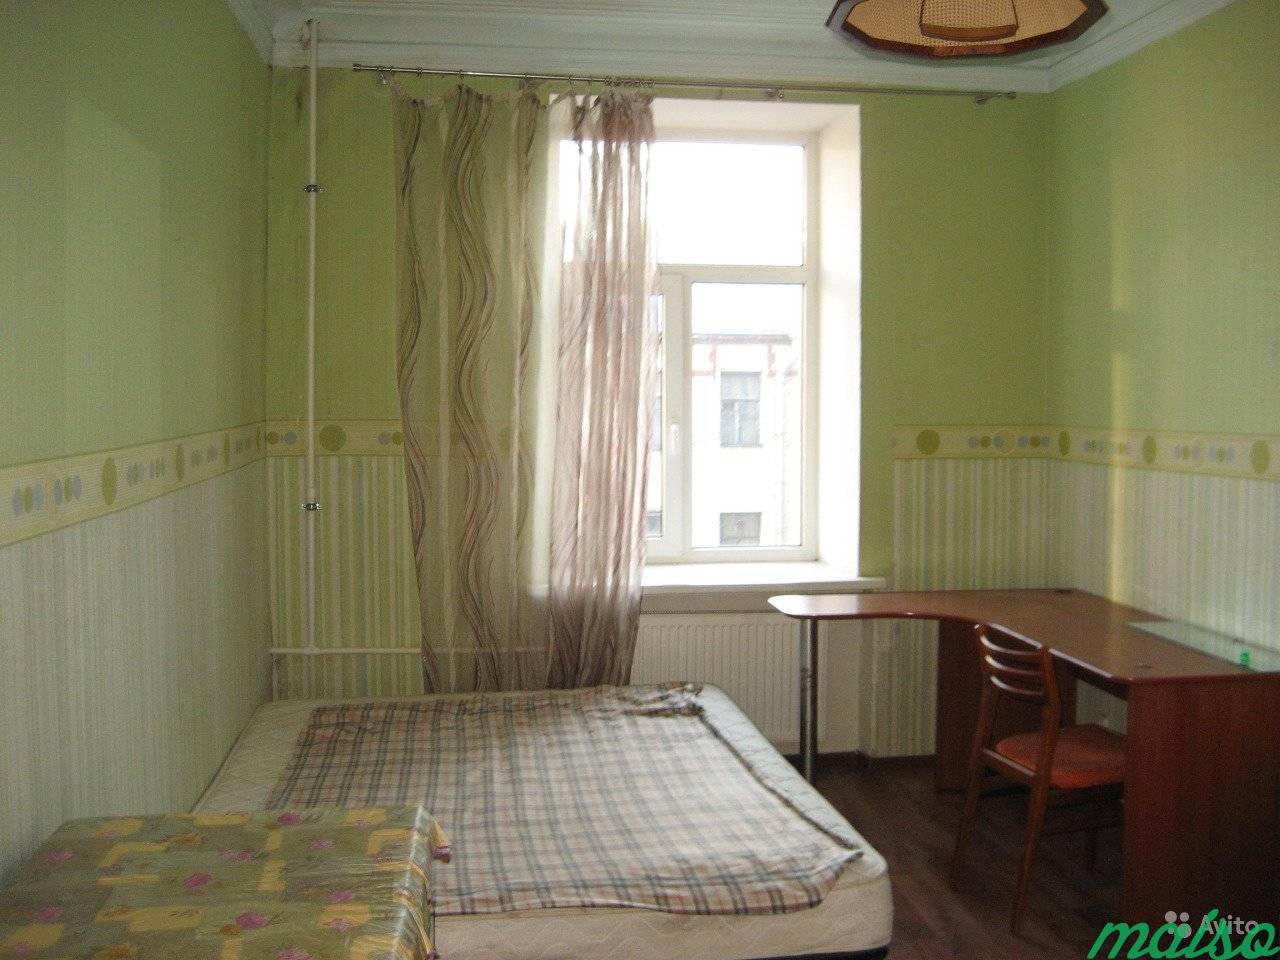 Комната 17 м² в 4-к, 5/5 эт. в Санкт-Петербурге. Фото 2